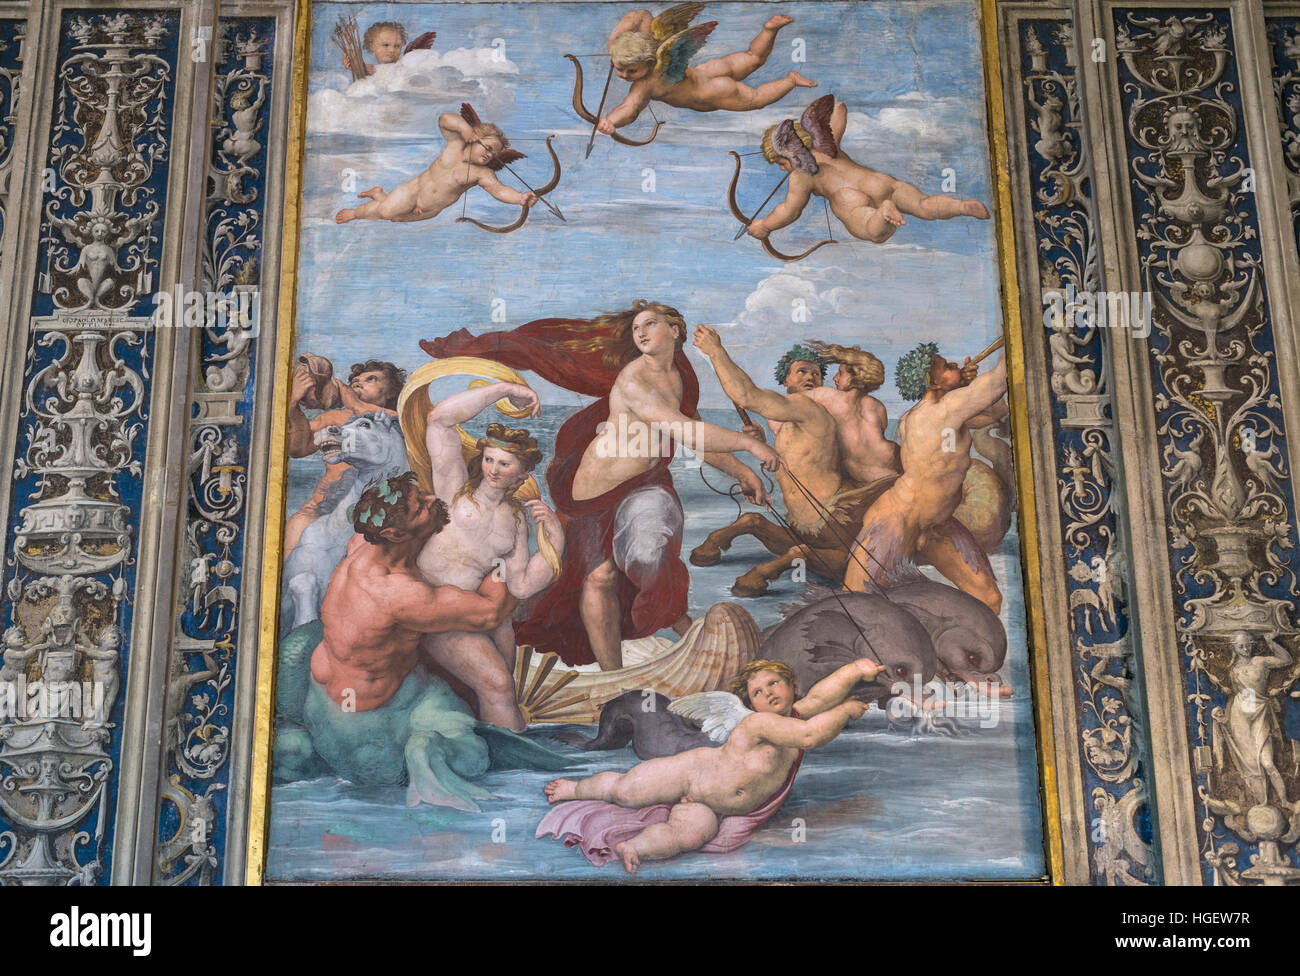 Rome. L'Italie. Villa Farnesina. Triomphe de Galatée, 1512, fresque de Raphaël dans la Loggia di Galatea, Banque D'Images